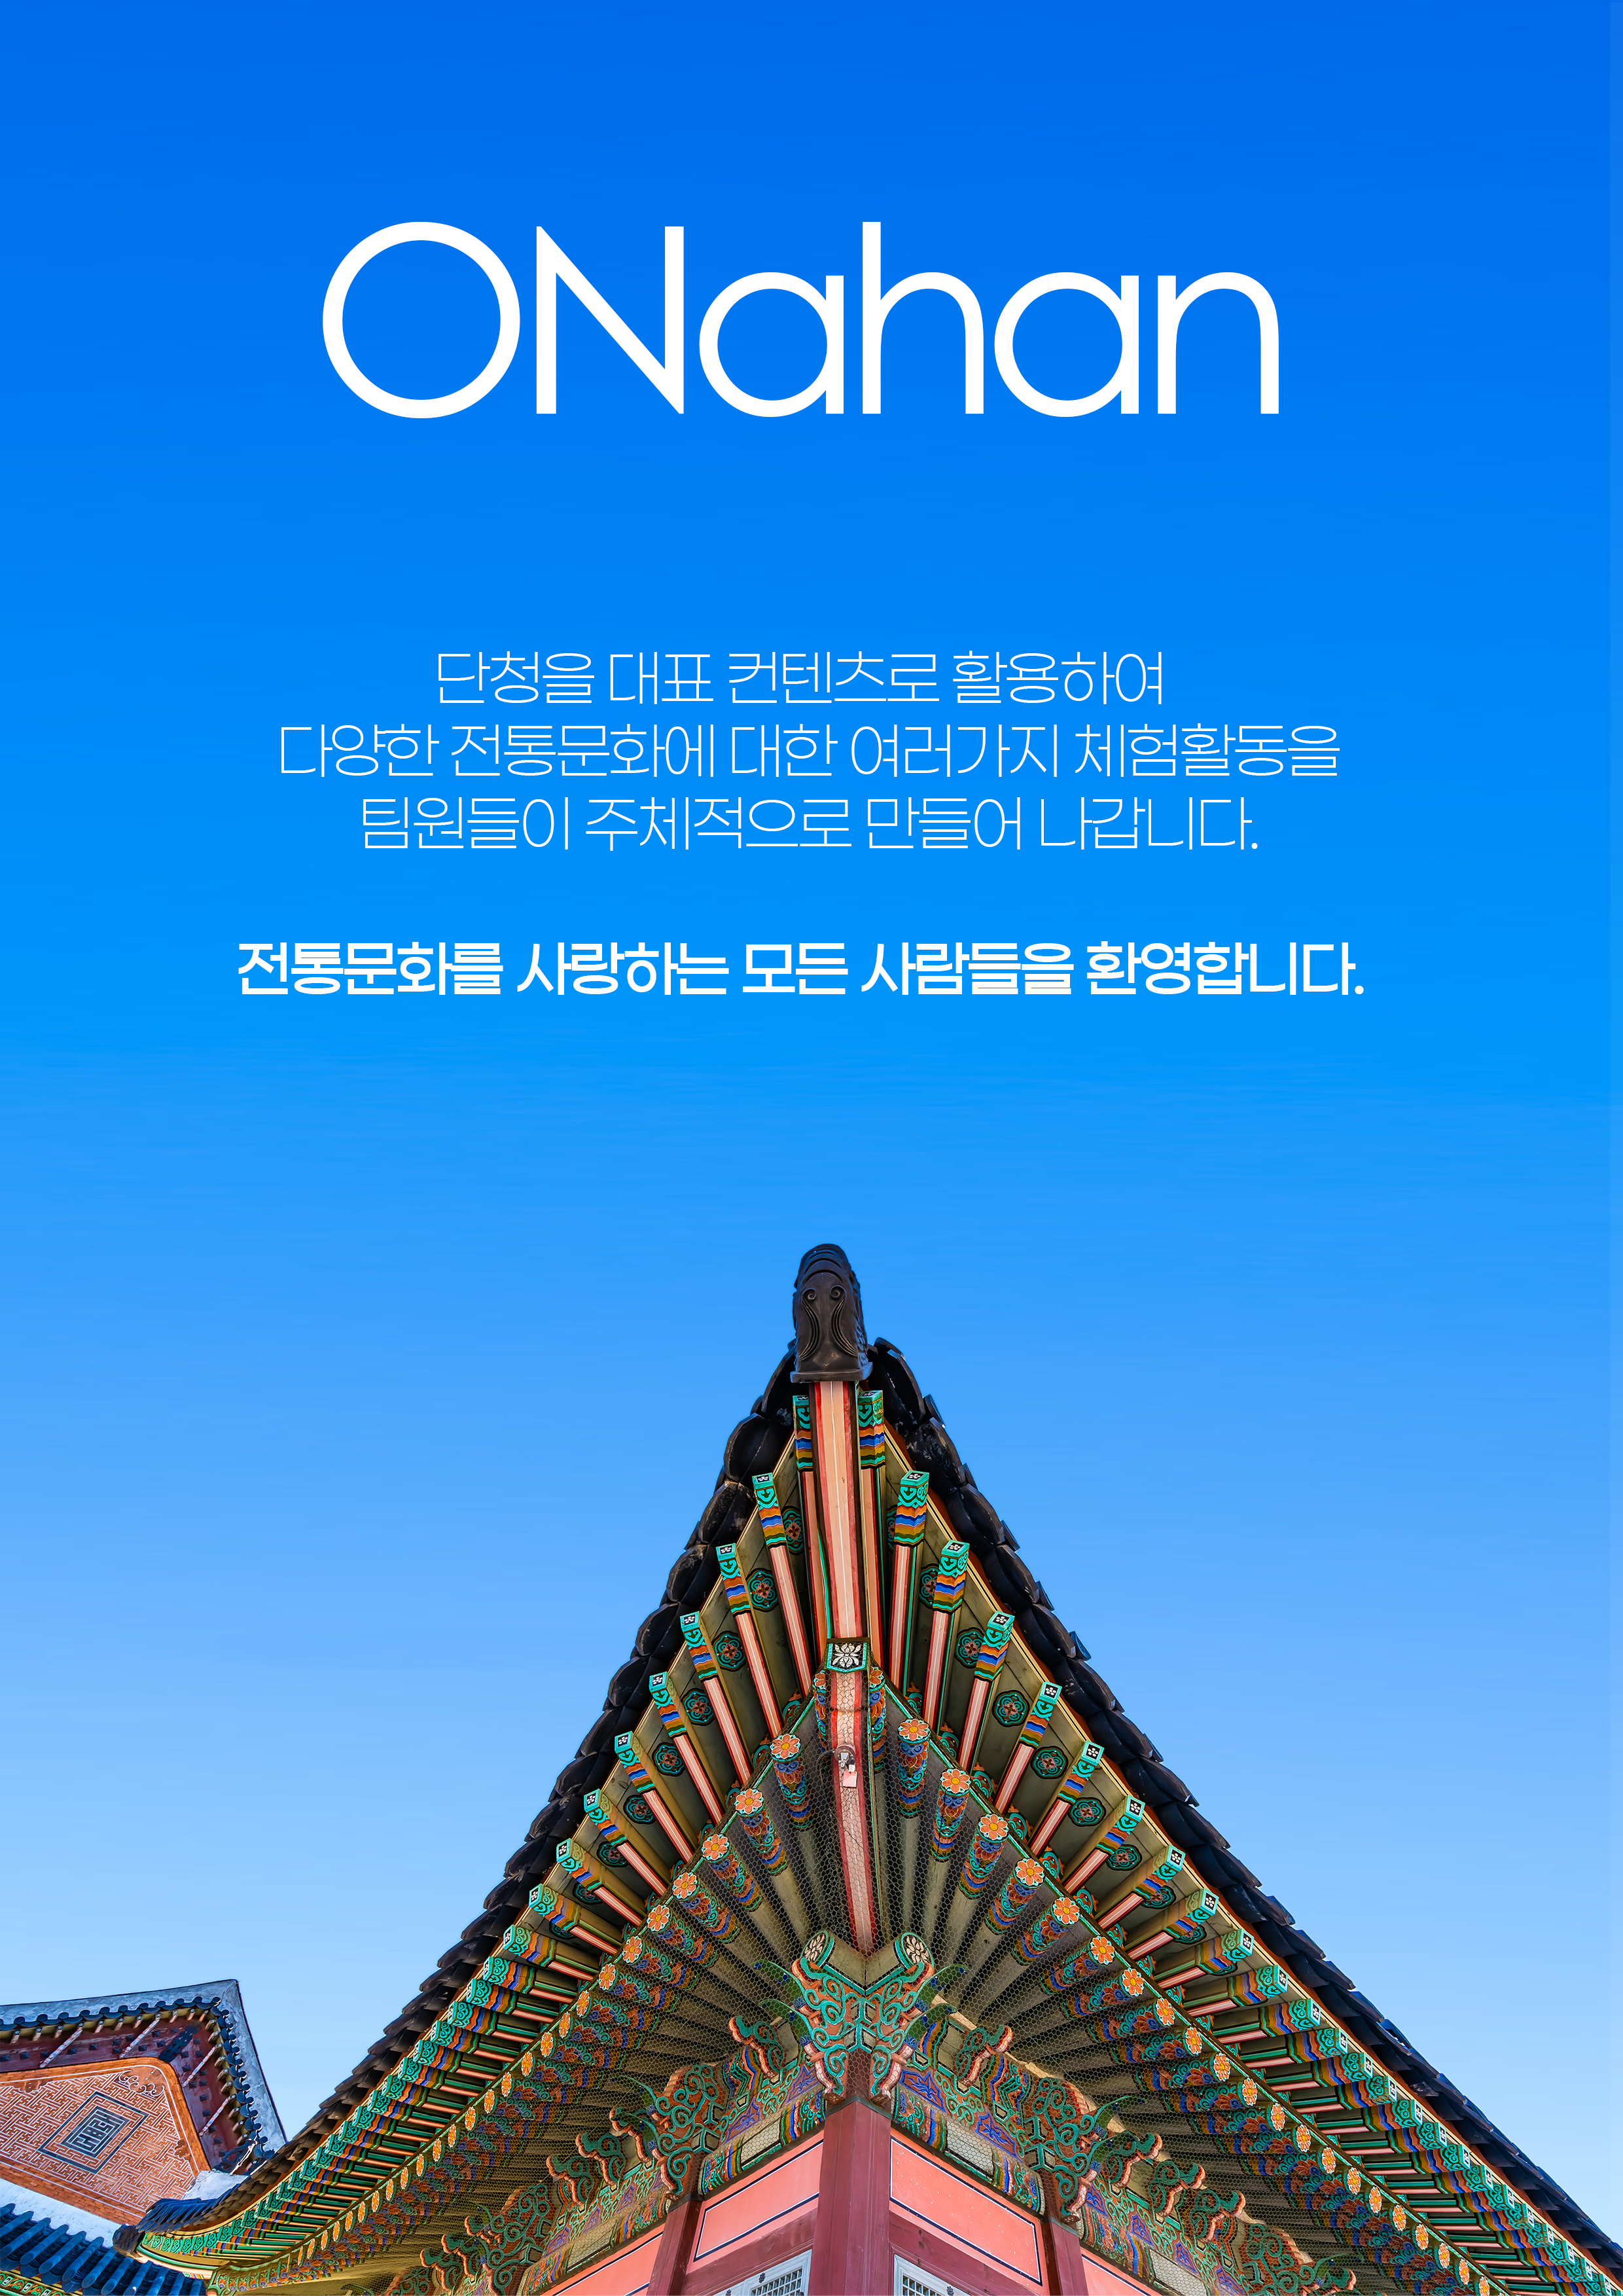 ONahan - 단청 생활문화동아리 팀원 모집